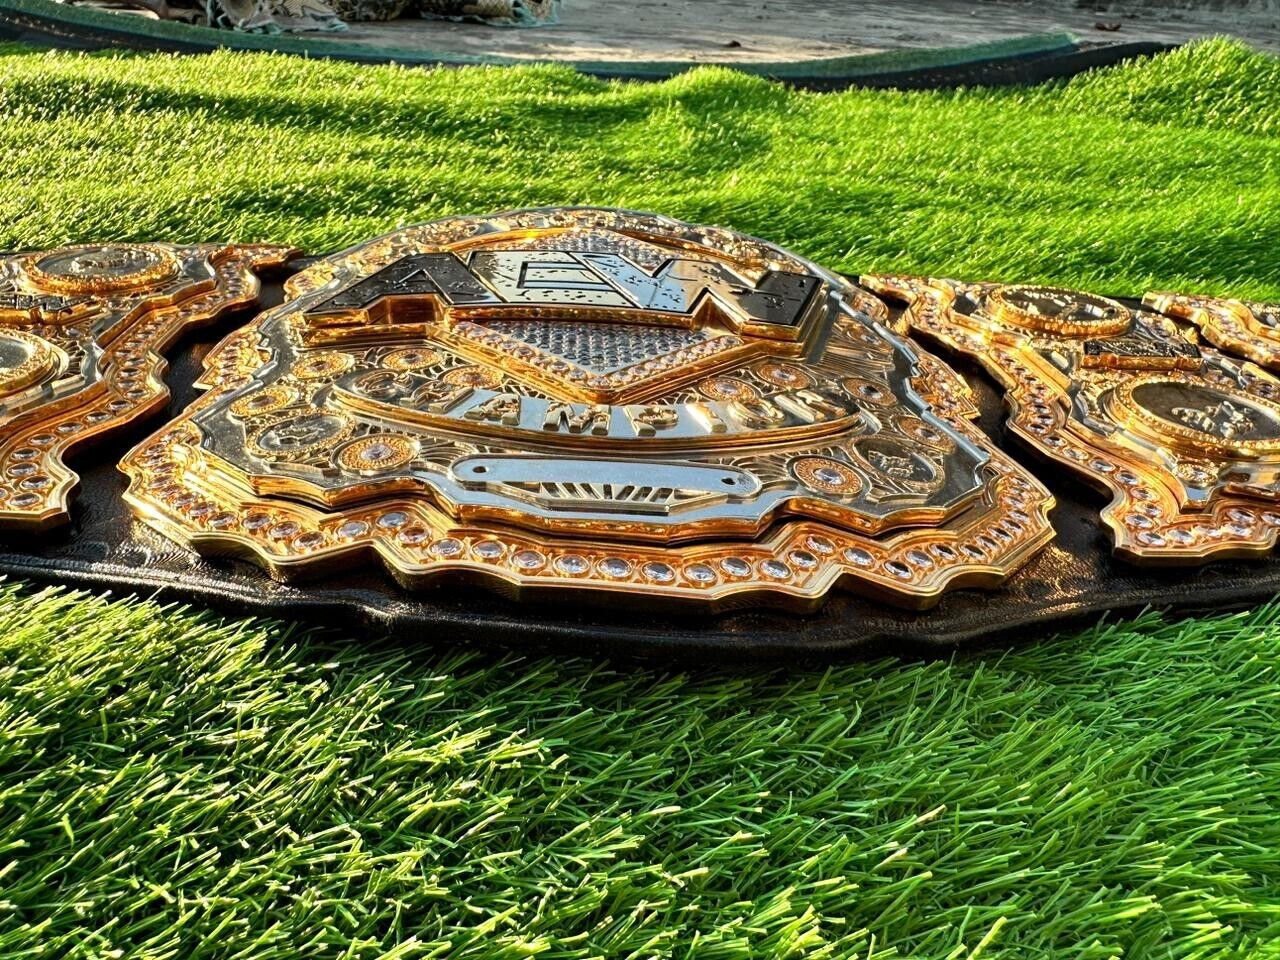 AEW World Heavyweight Championship Title Belt CNC HD 4 Layers Stacked Adult Size